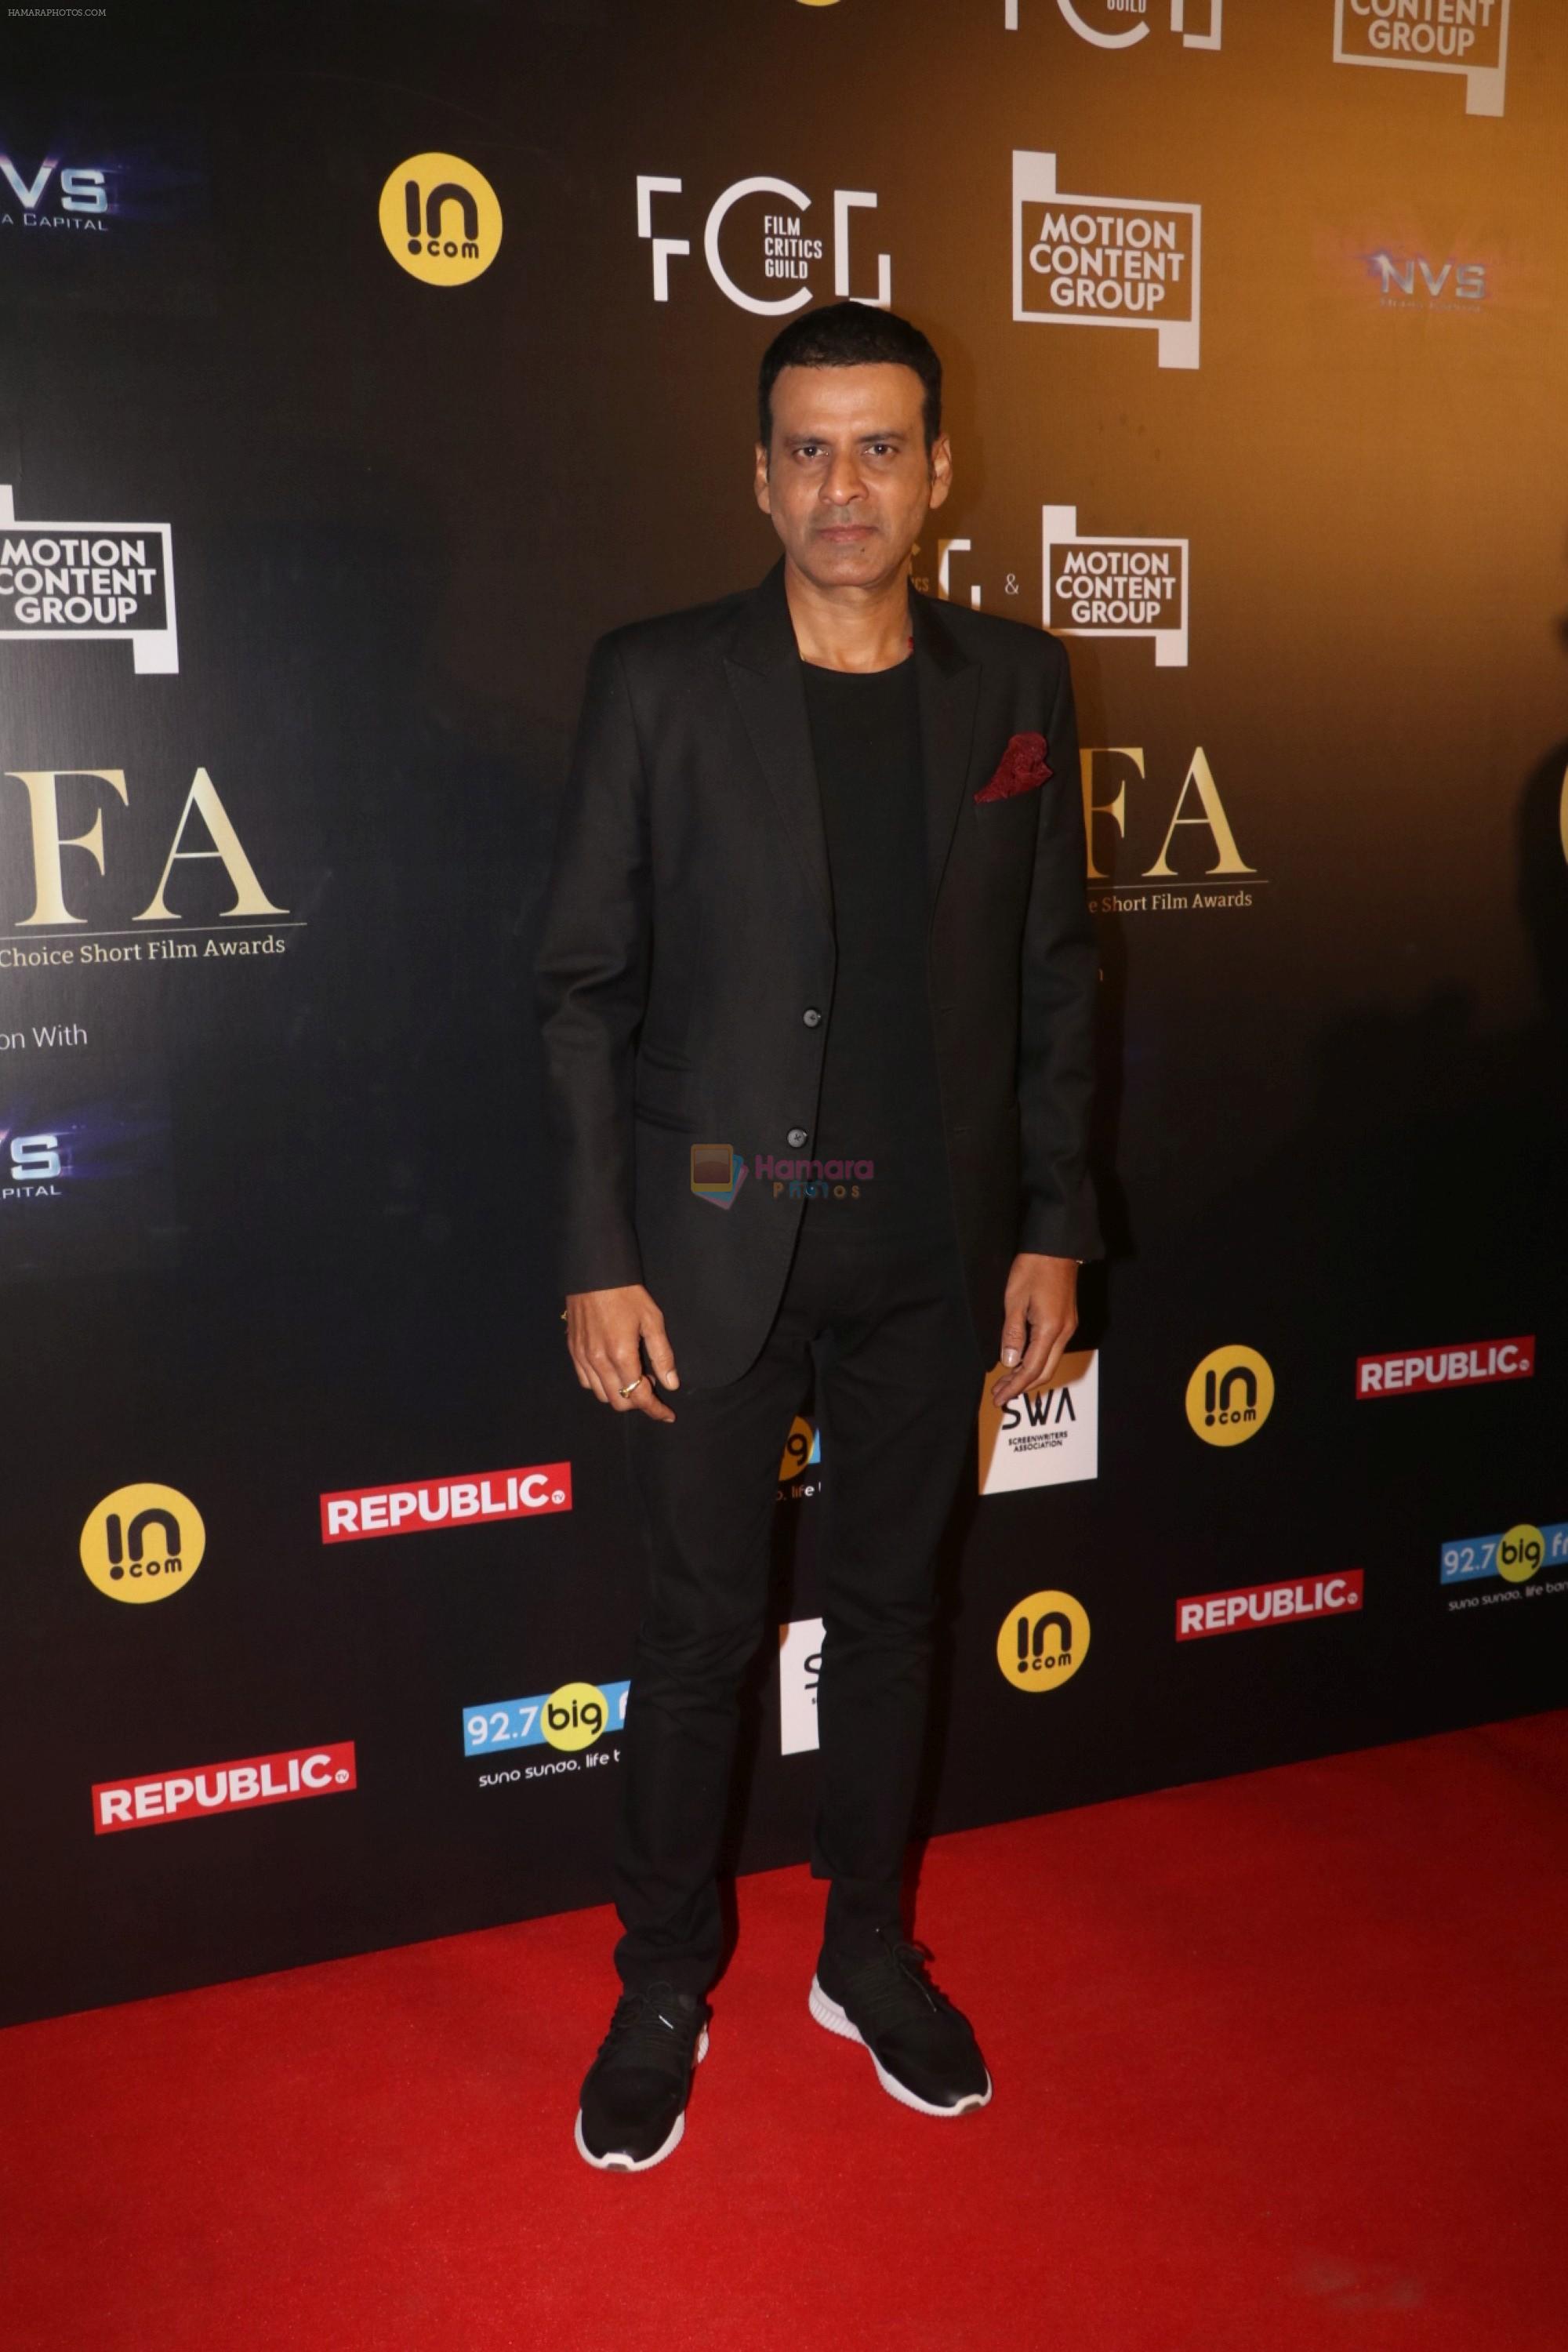 Manoj Bajpai at the Red carpet of critics choice short film awards on 15th Dec 2018